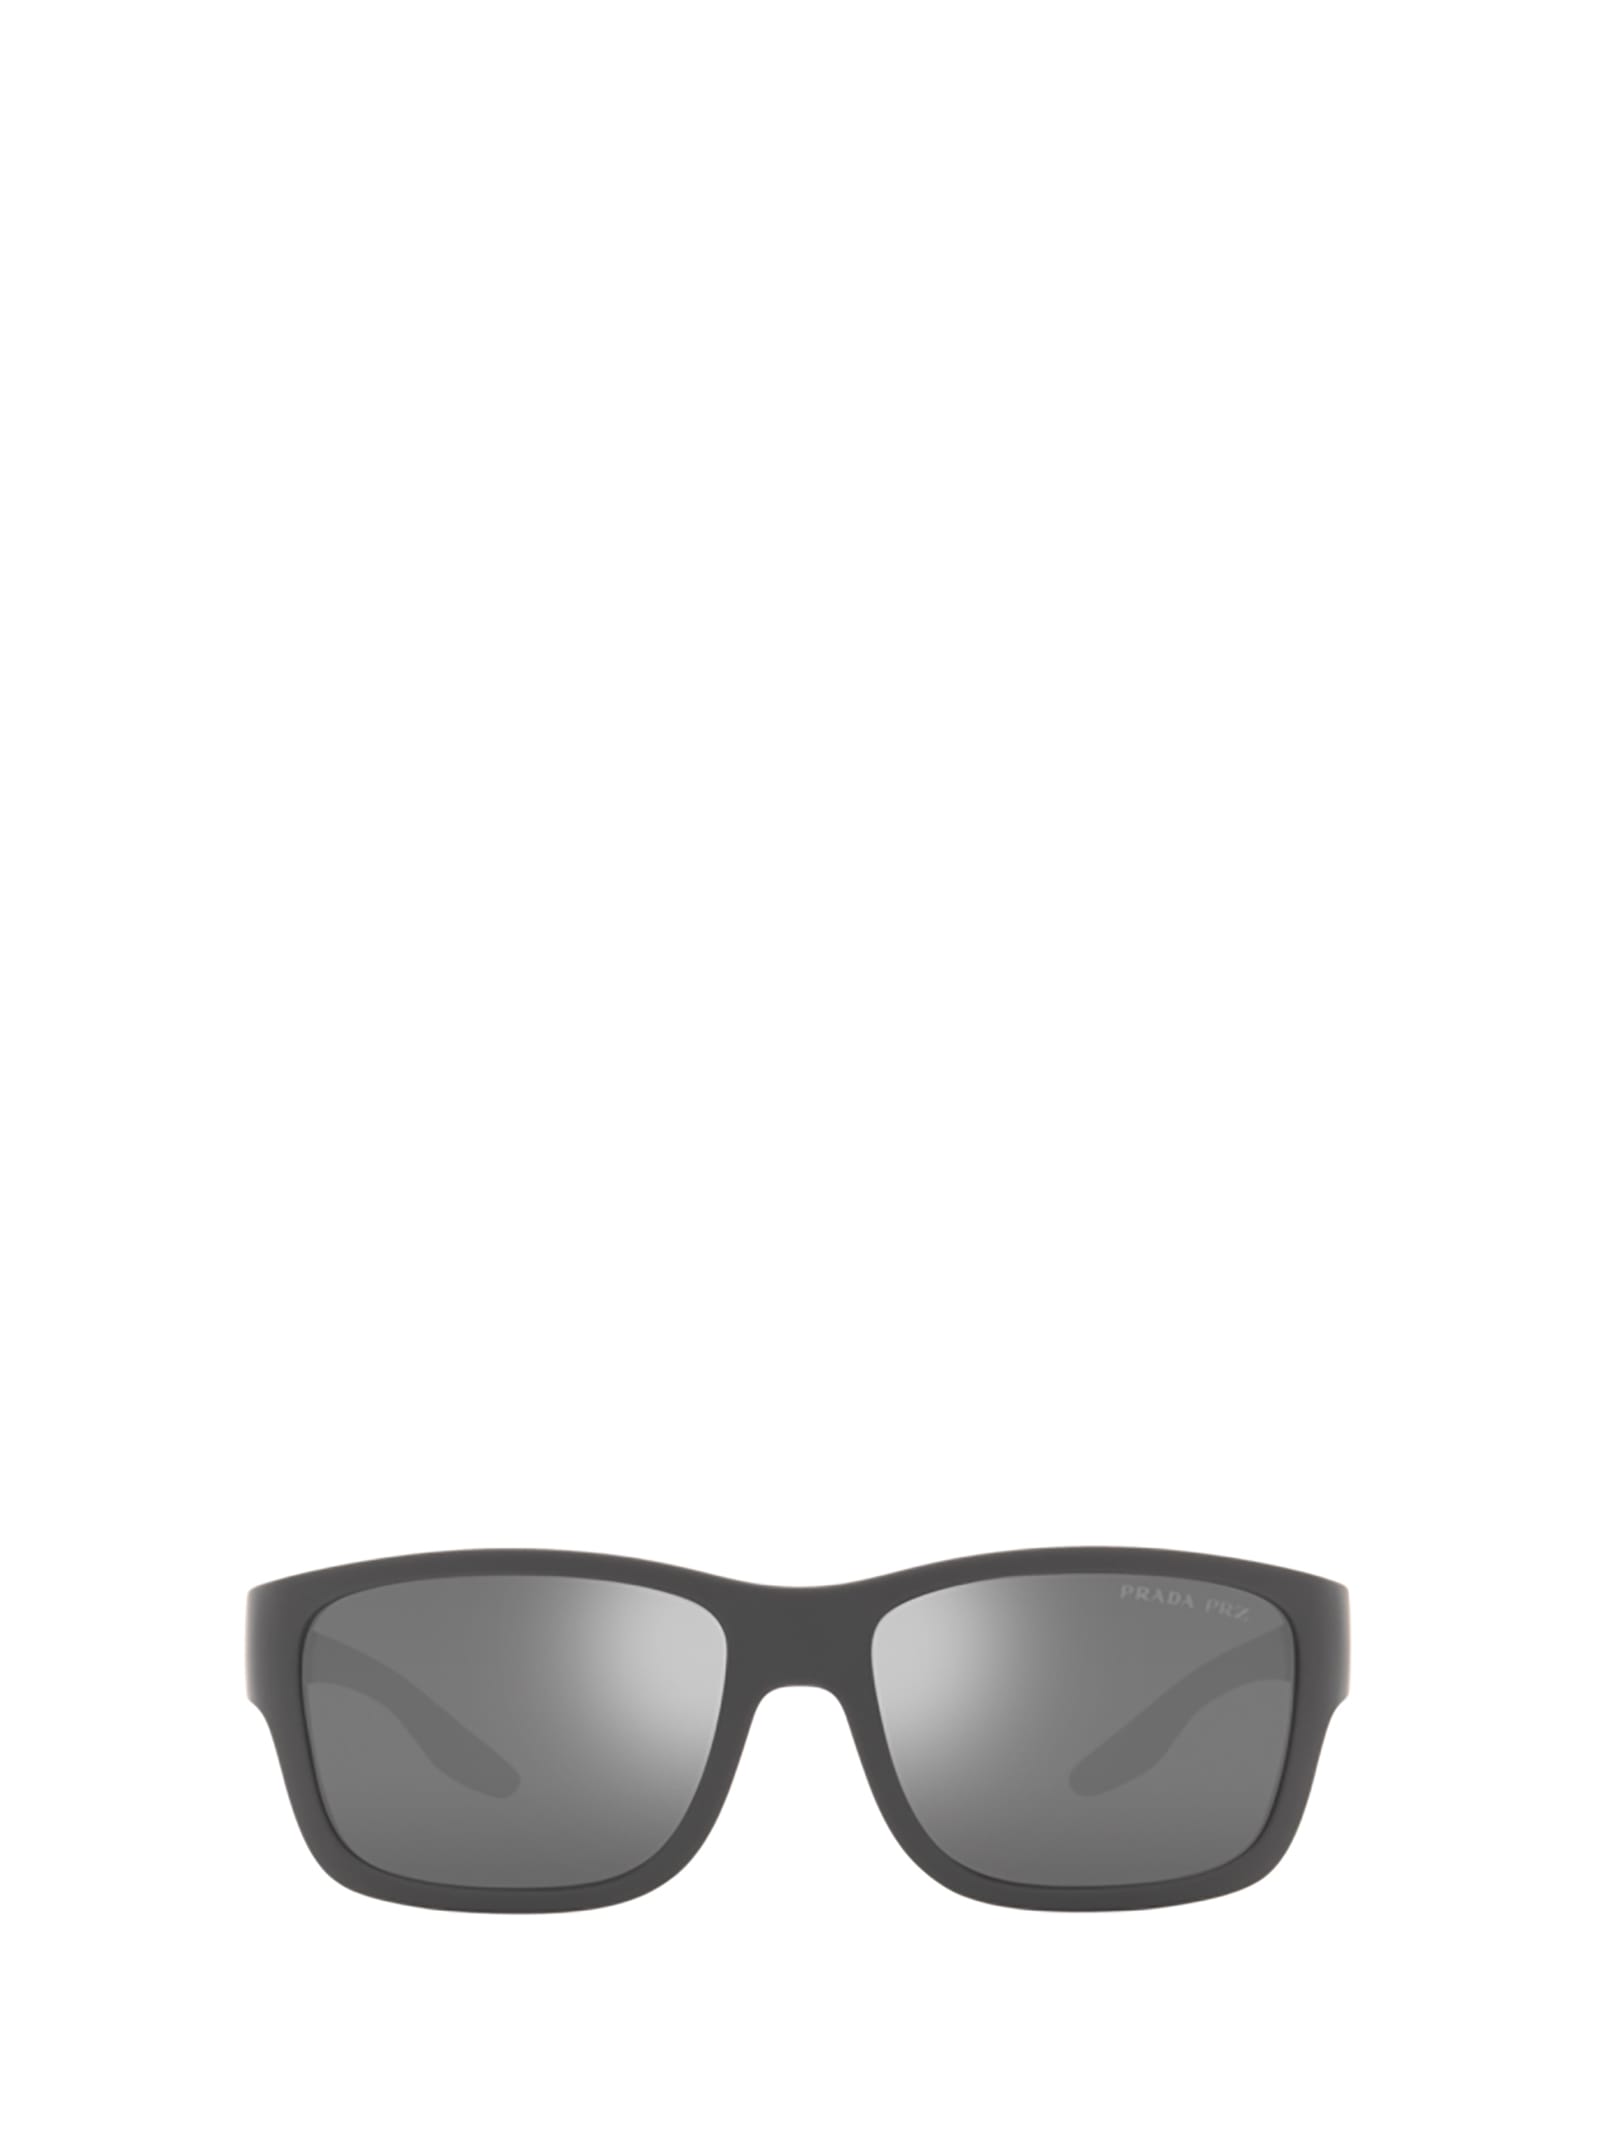 Prada Ps 01ws Grey Rubber Sunglasses In Grey